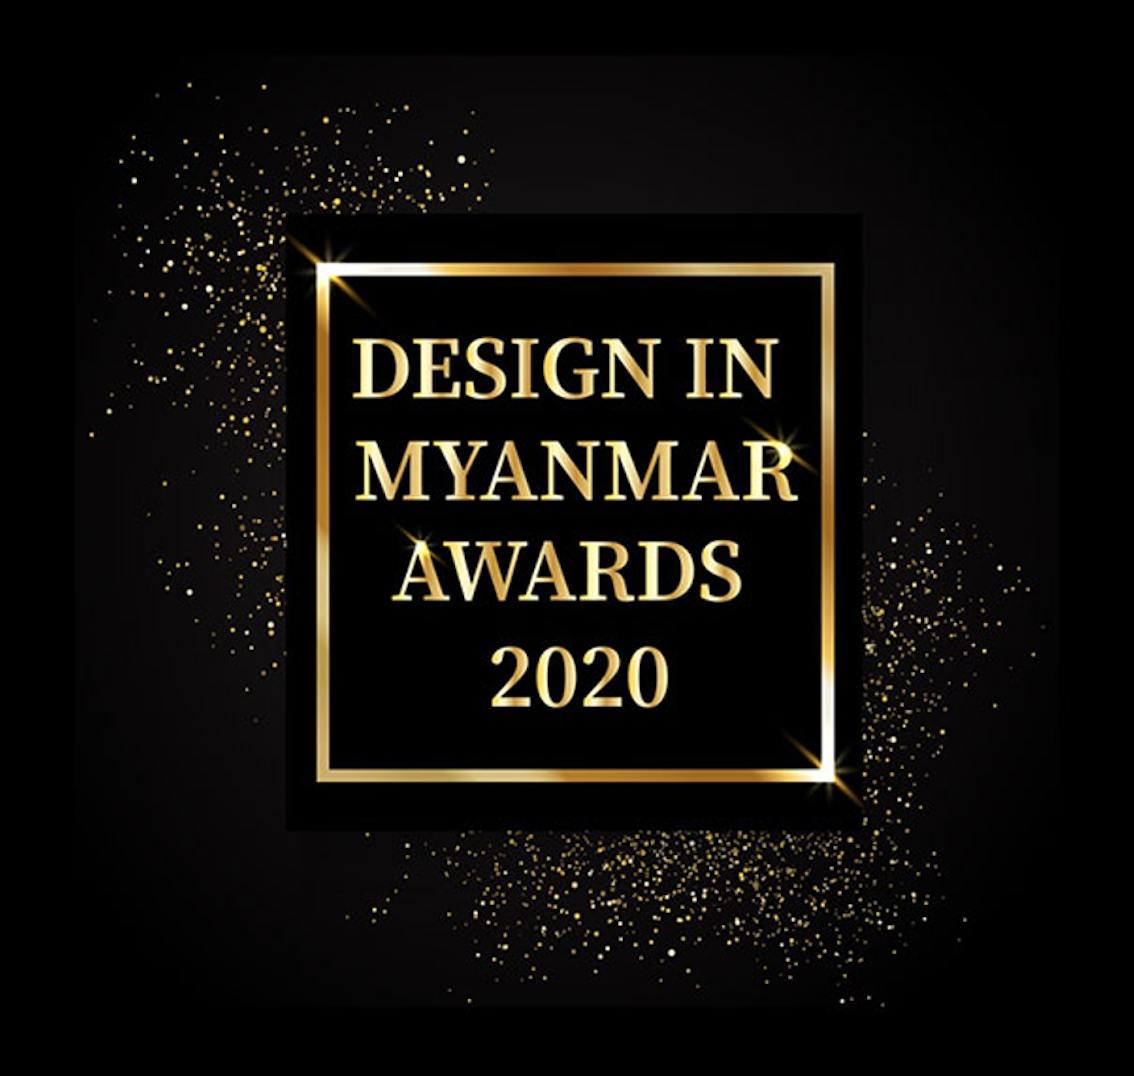 DESIGN IN MYANAMR AWARDS 2020